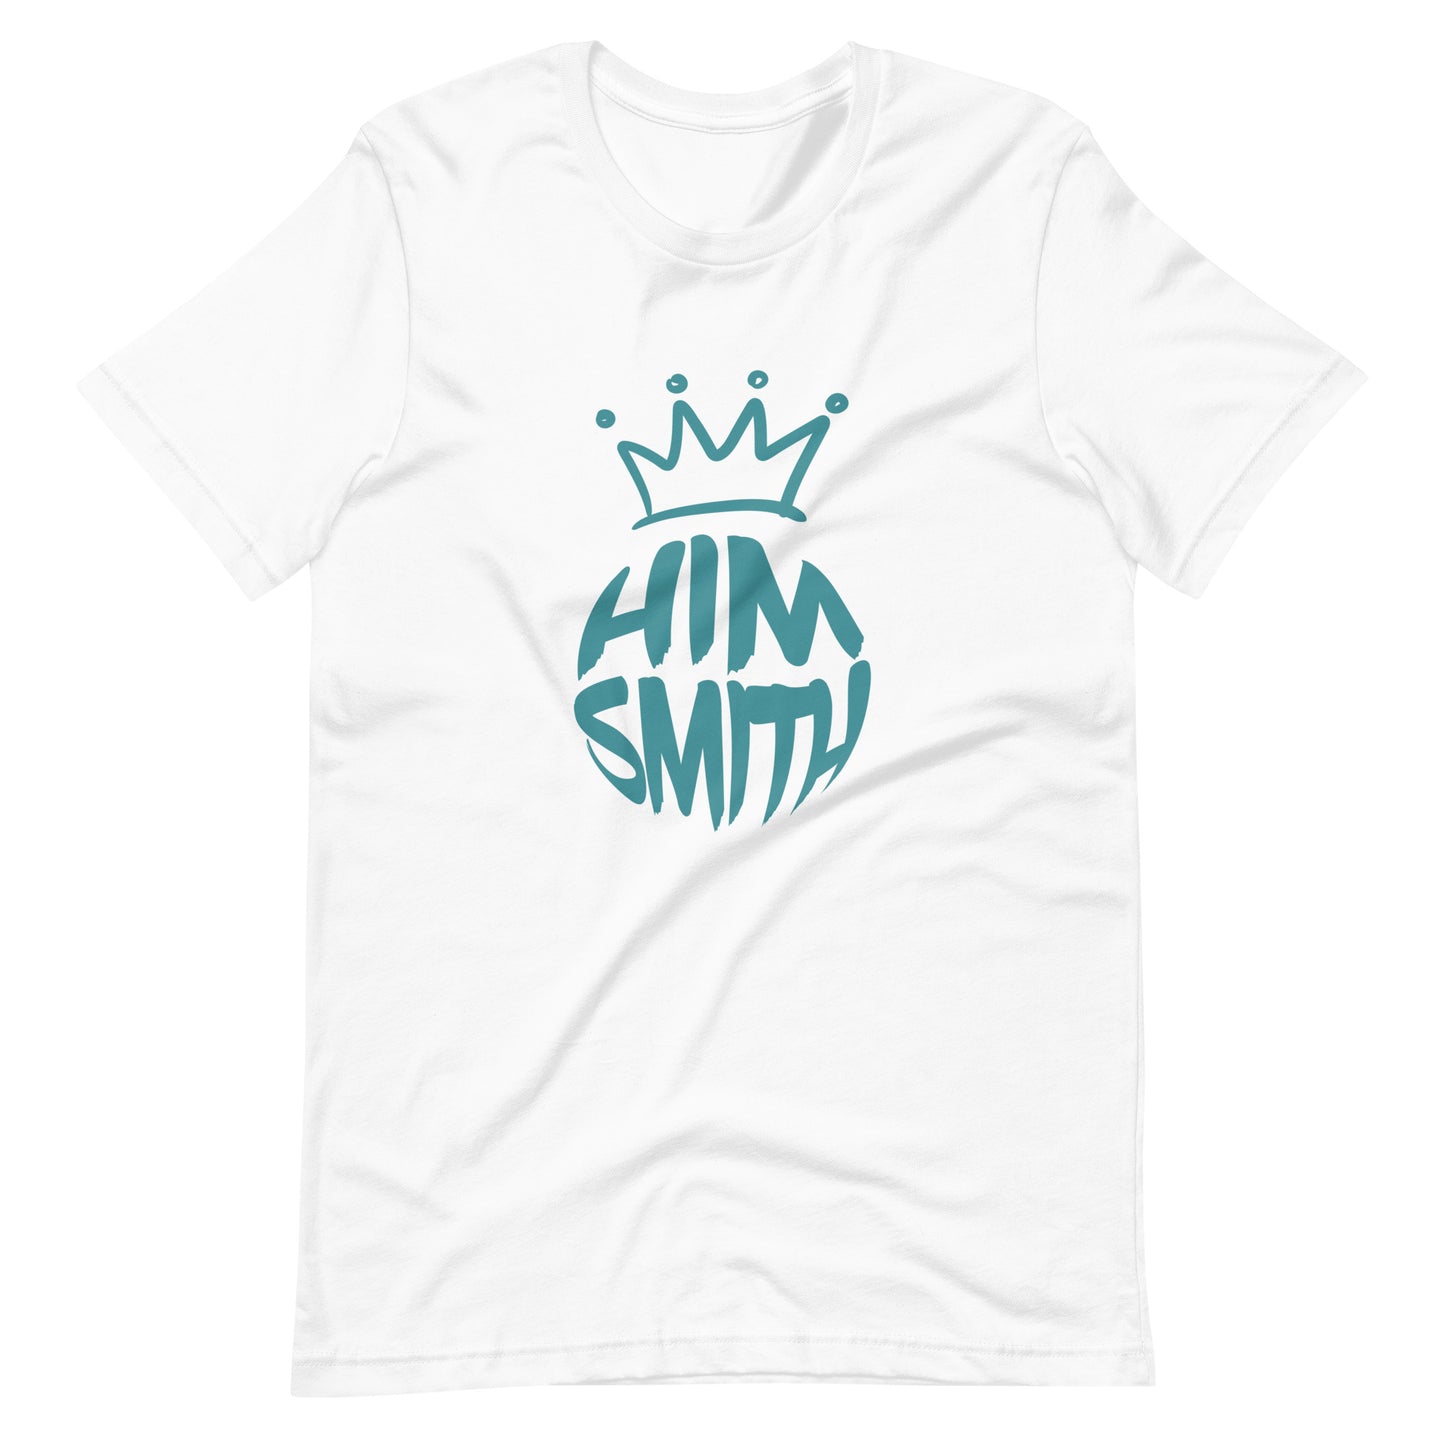 HIM Smith T-Shirt